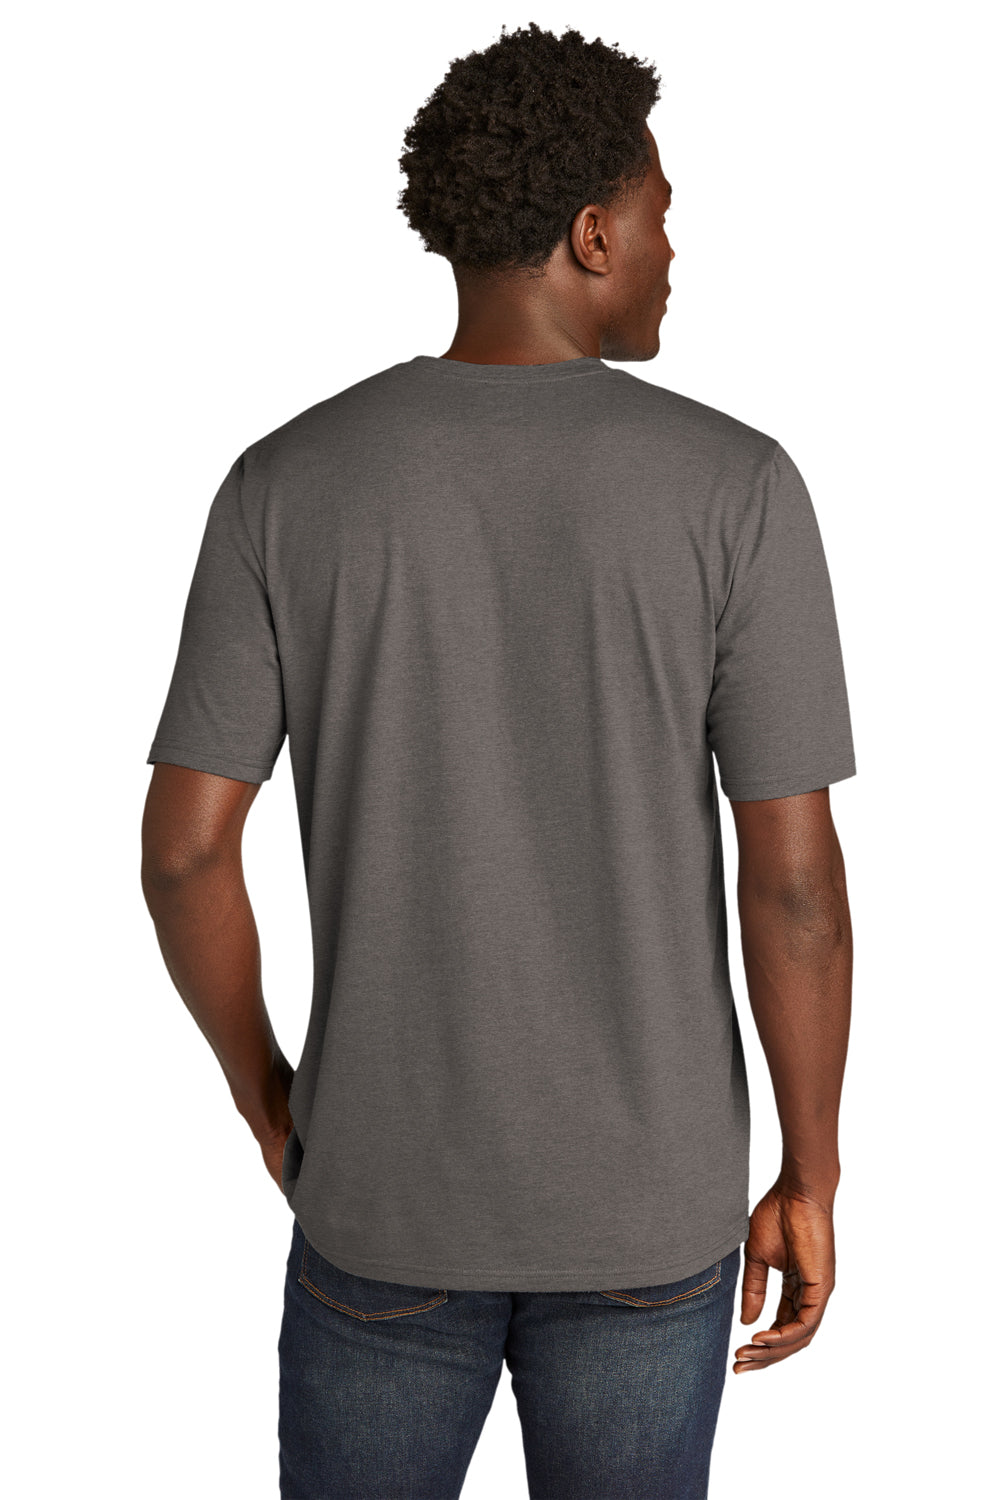 New Era Mens Short Sleeve Crewneck T-Shirt Shadow Grey Side